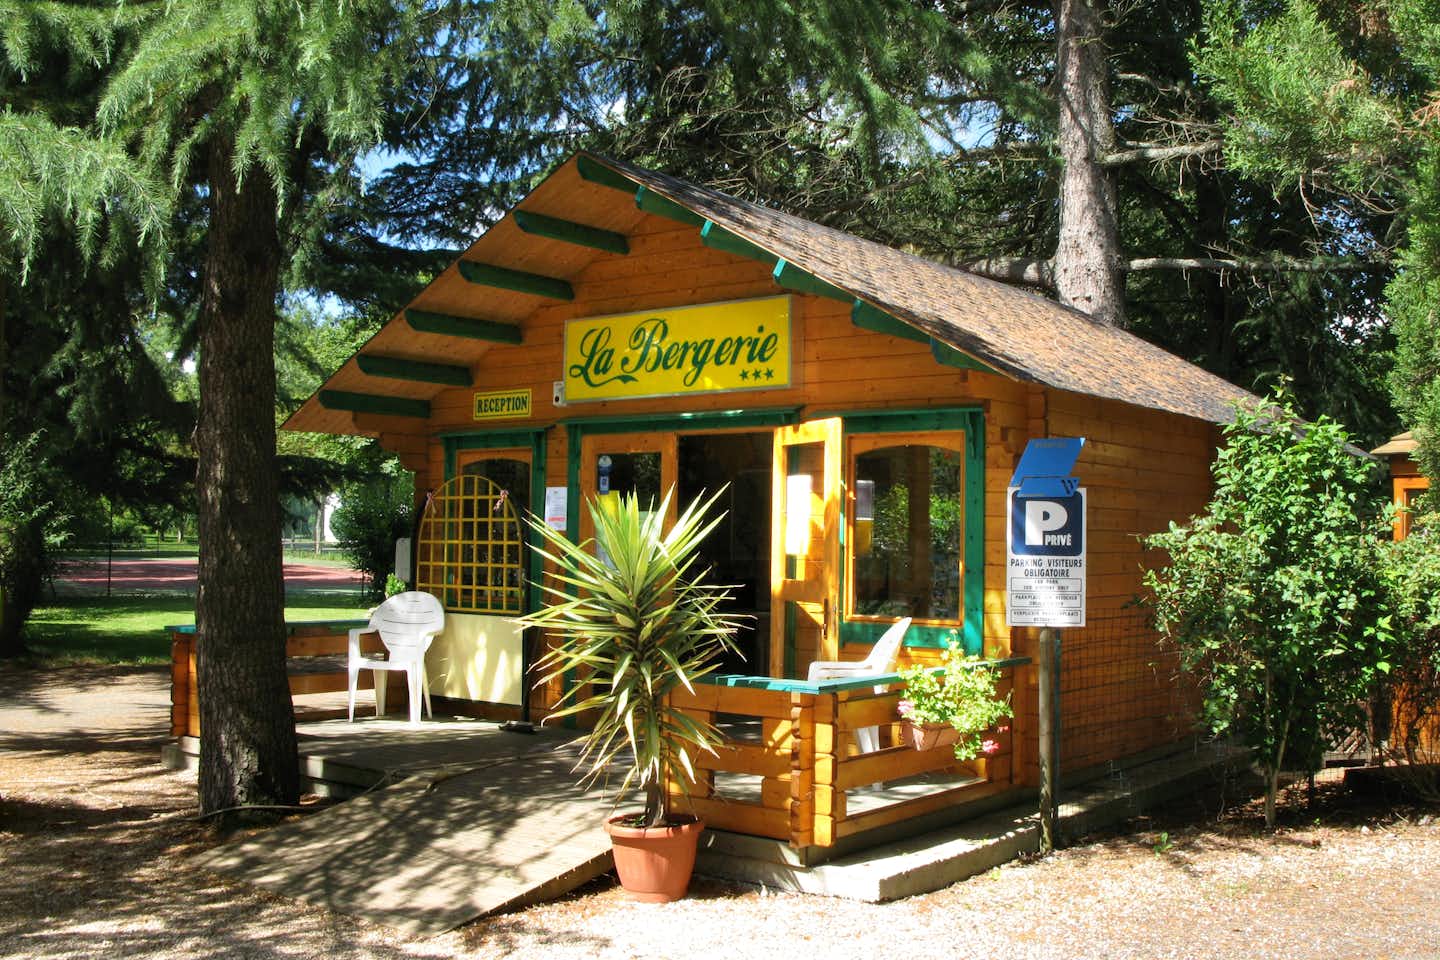 Camping de La Bergerie  -  Rezeption vom Campingplatz zwischen Bäumen